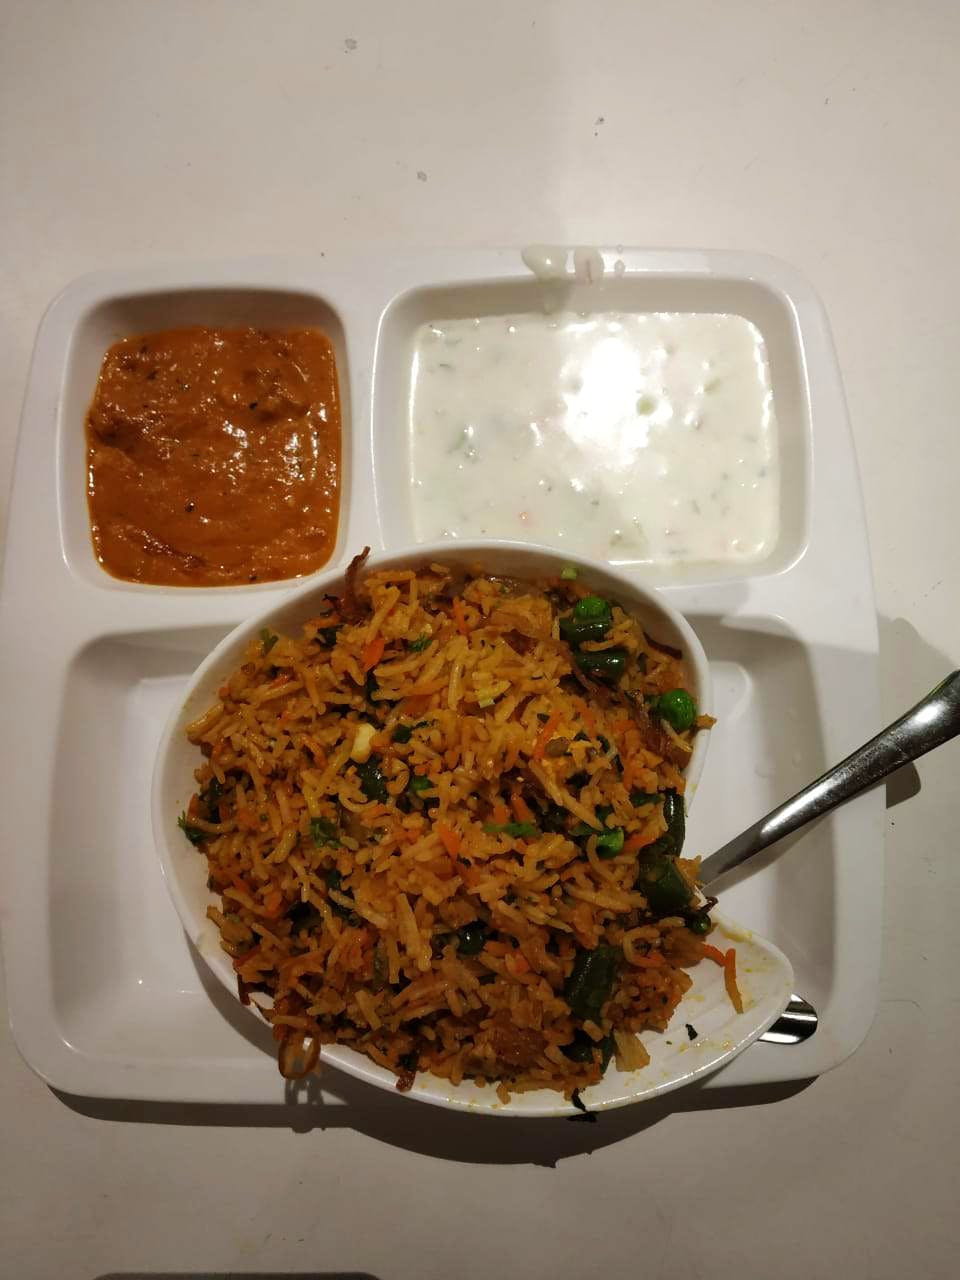 Cuisine,Food,Dish,Ingredient,Steamed rice,Biryani,Hyderabadi biriyani,Side dish,Puliyogare,Rice